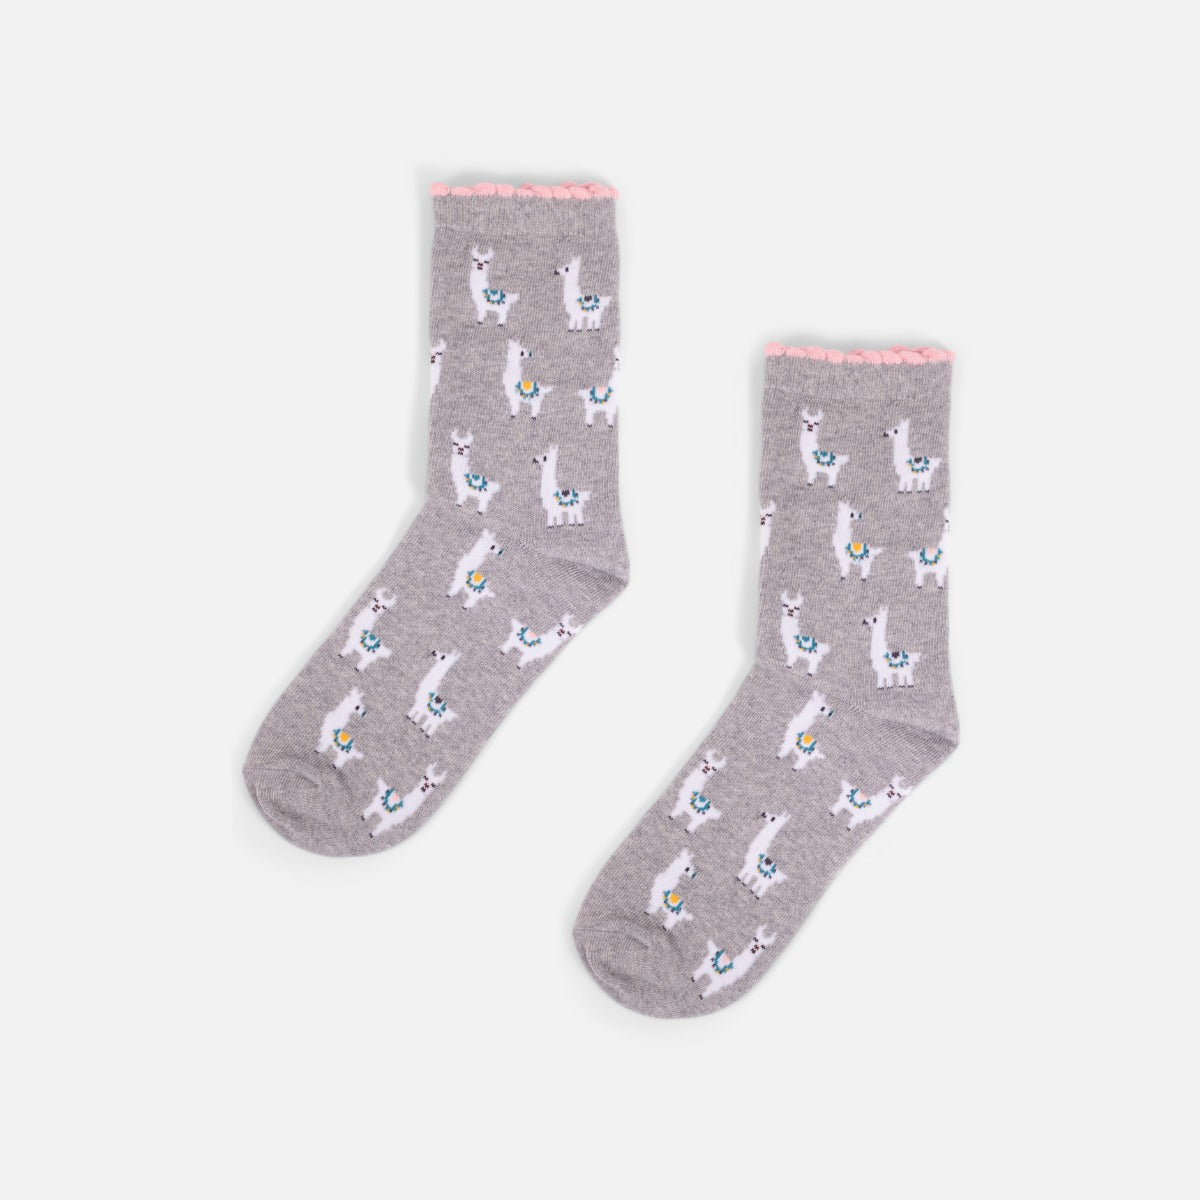 Pale grey socks with small llamas   